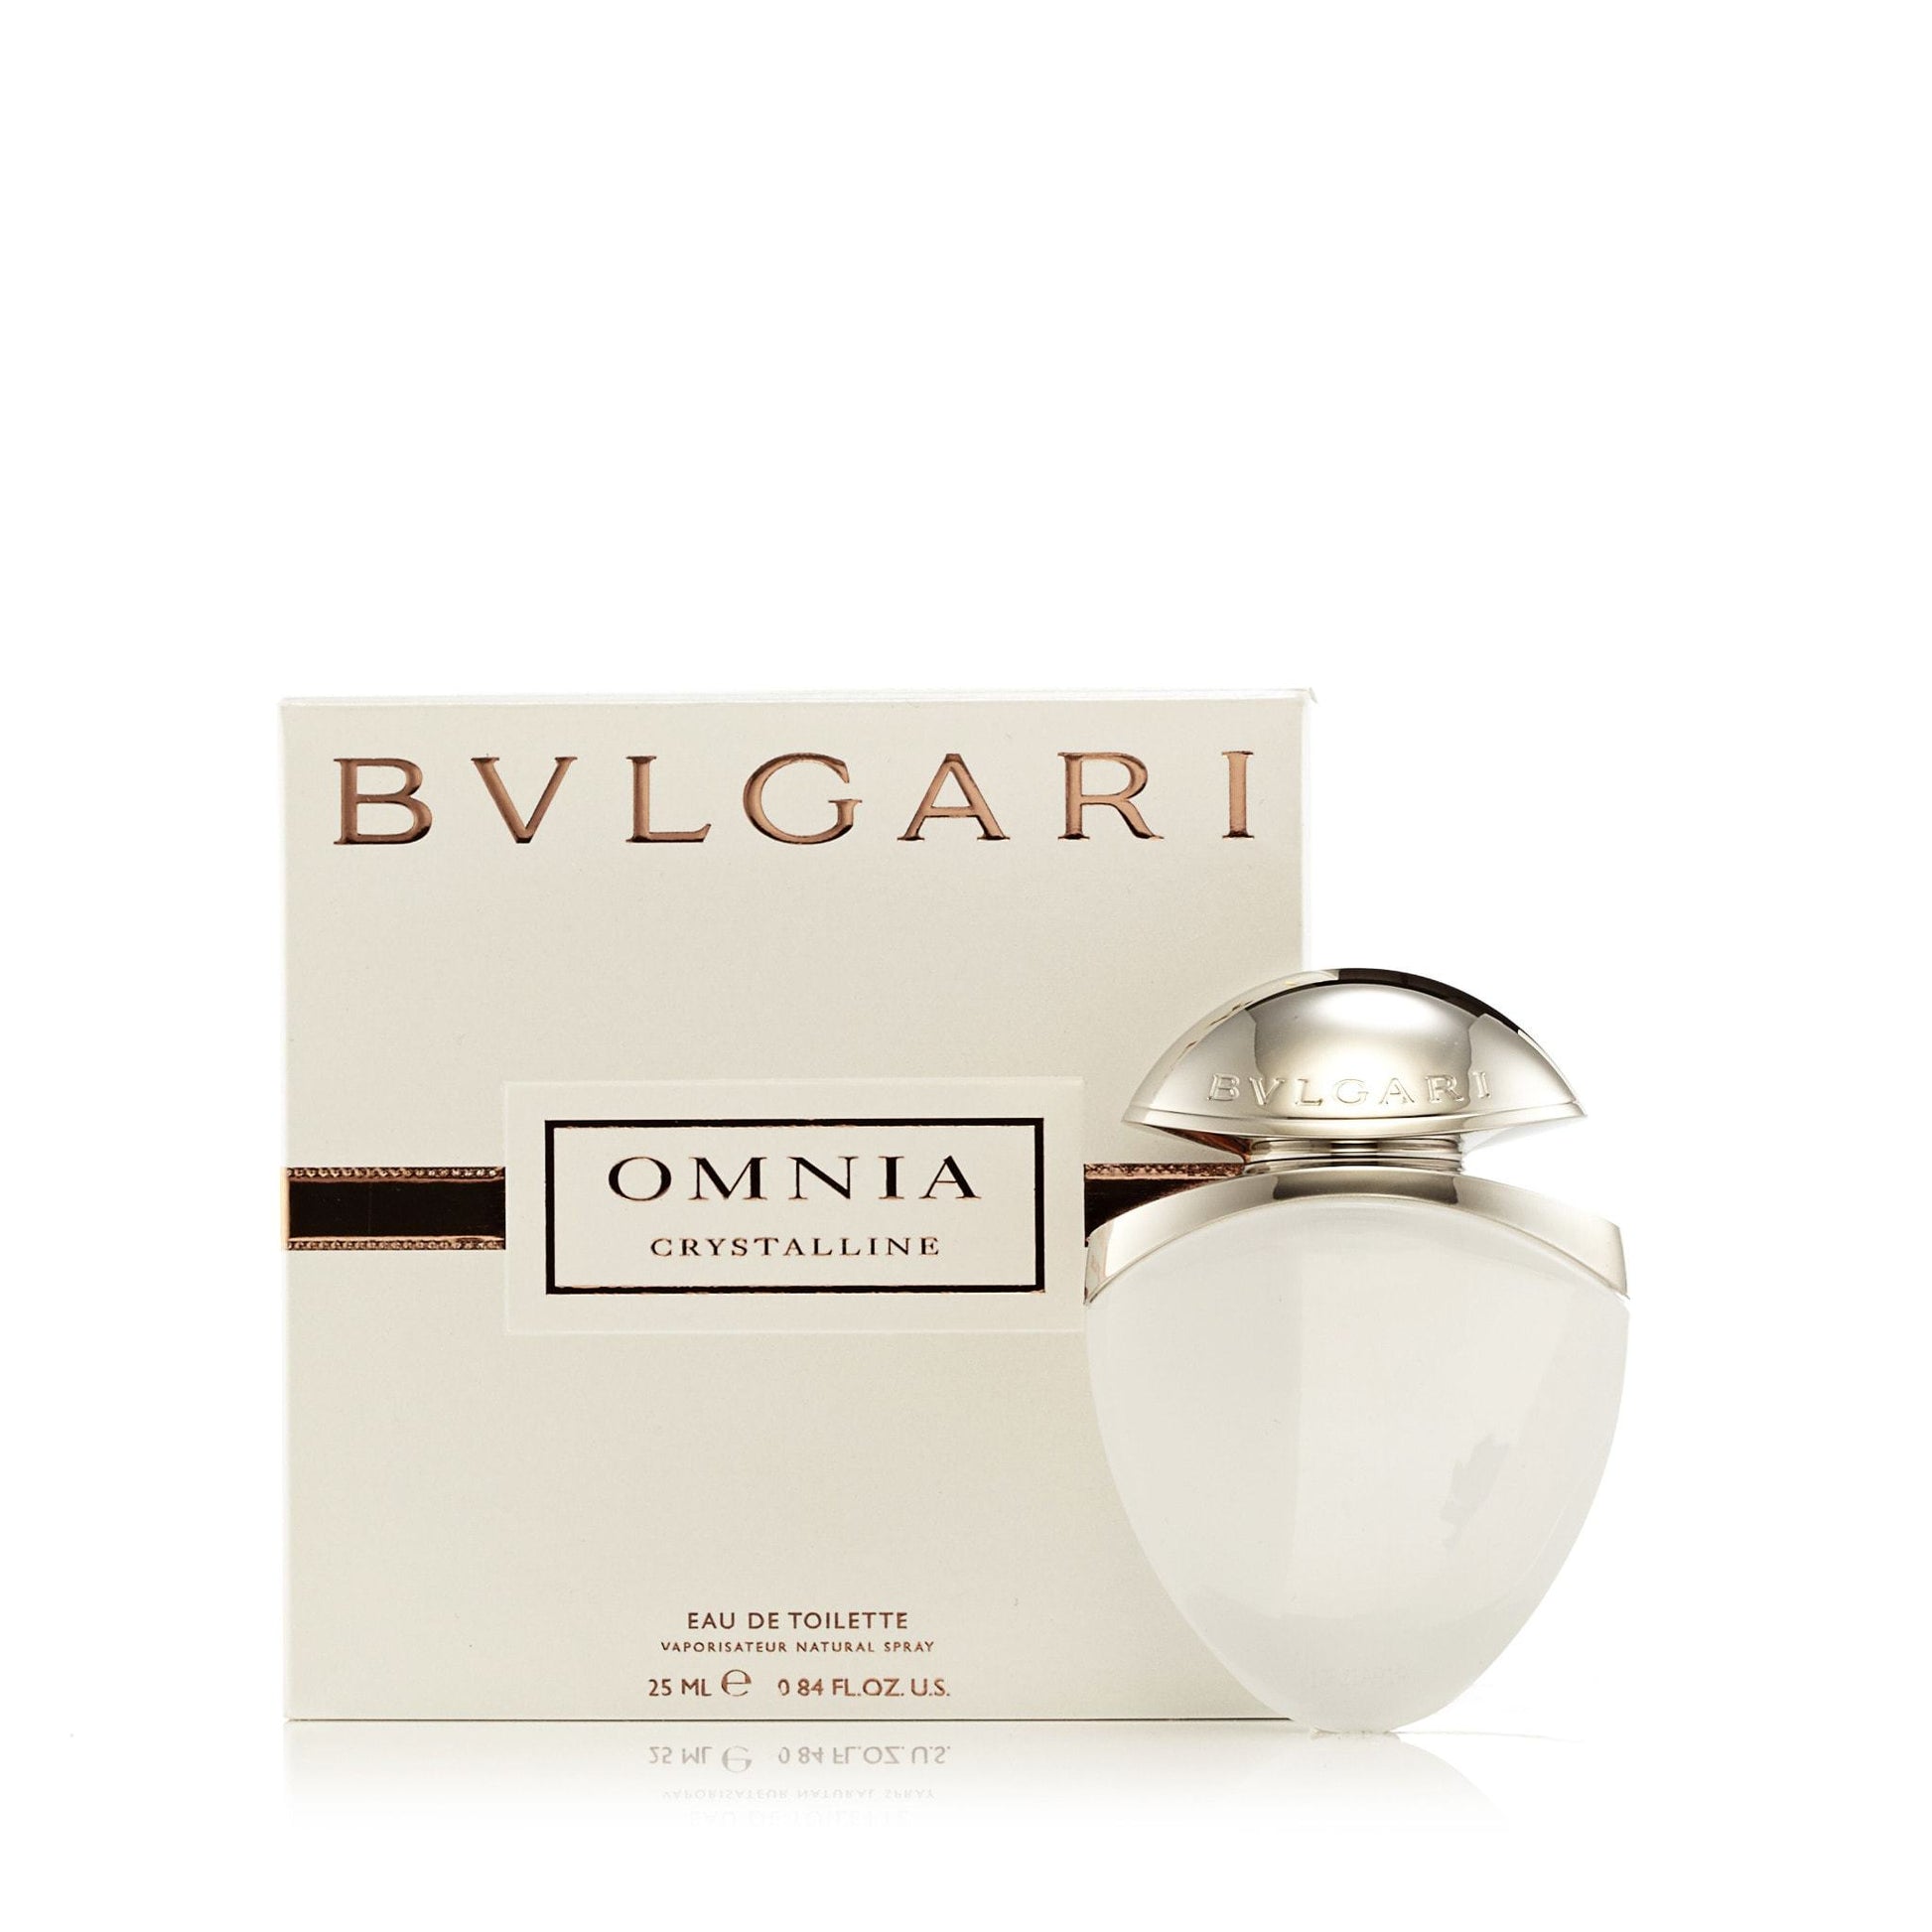 Omnia Crystalline Eau de Toilette Spray for Women by Bvlgari, Product image 6